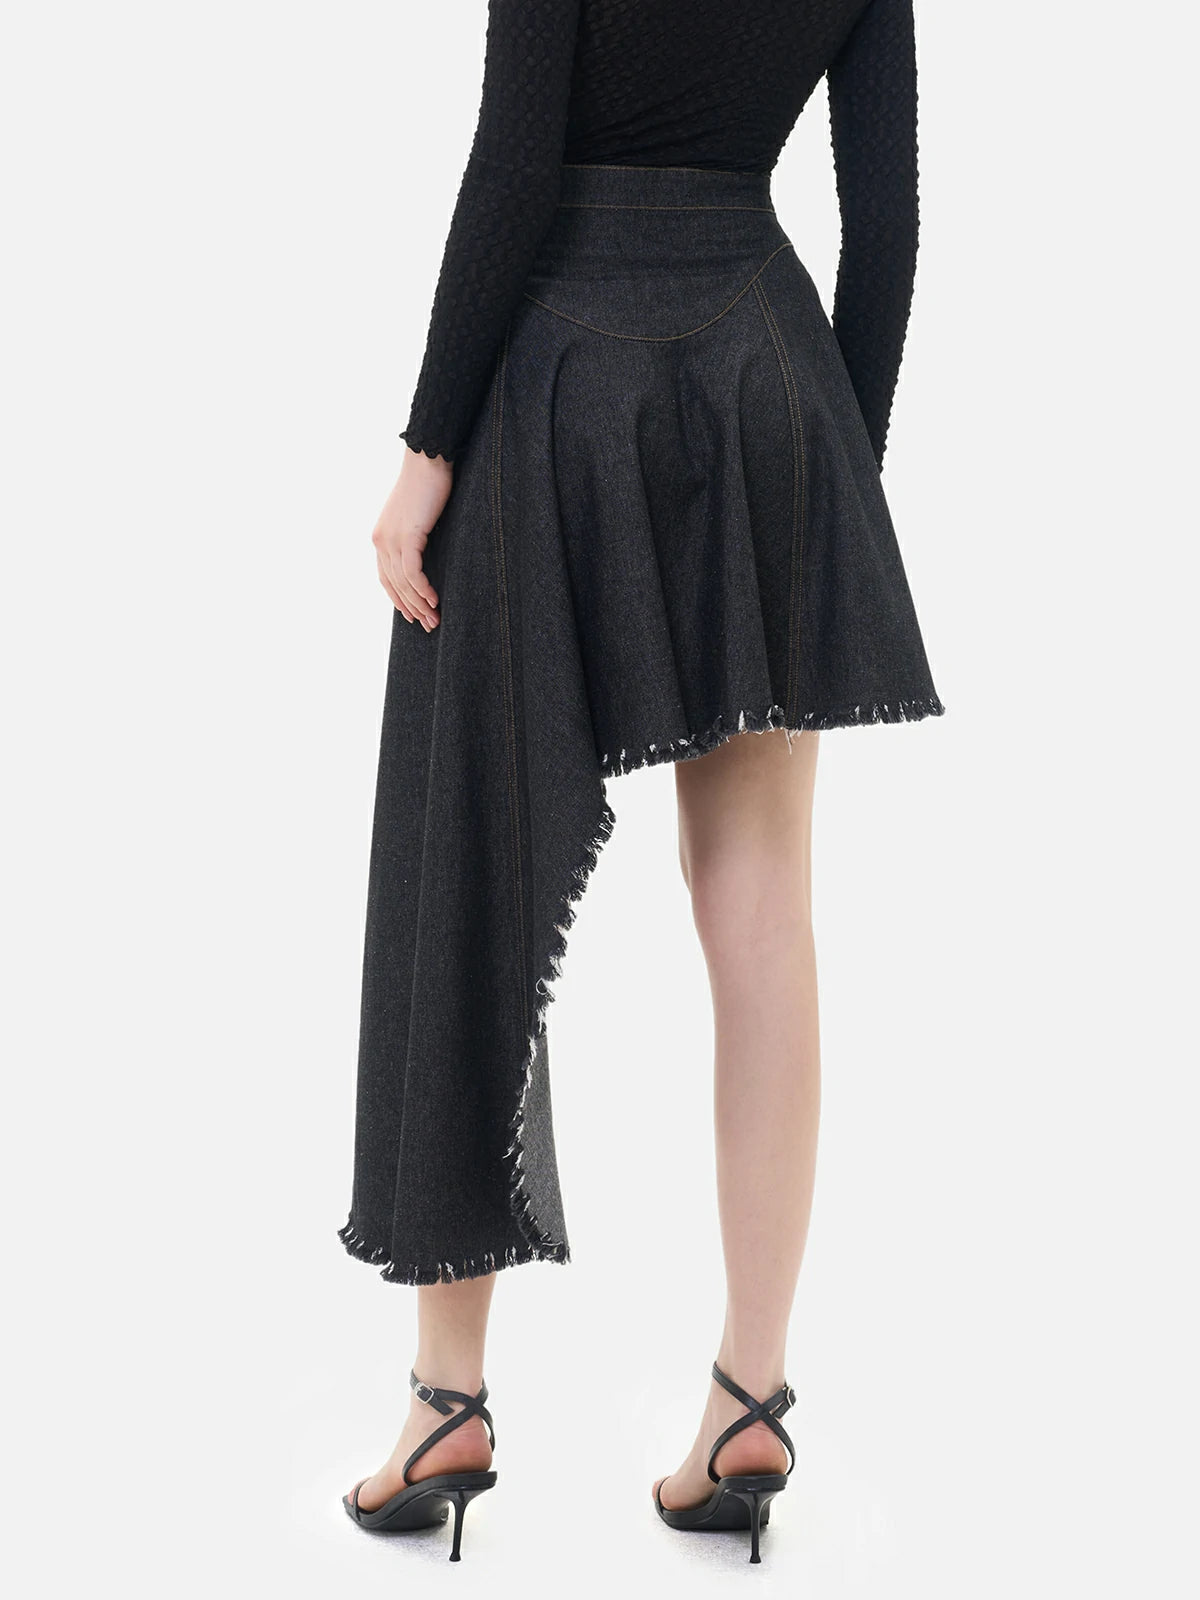 Cutting-edge and asymmetrical denim skirt